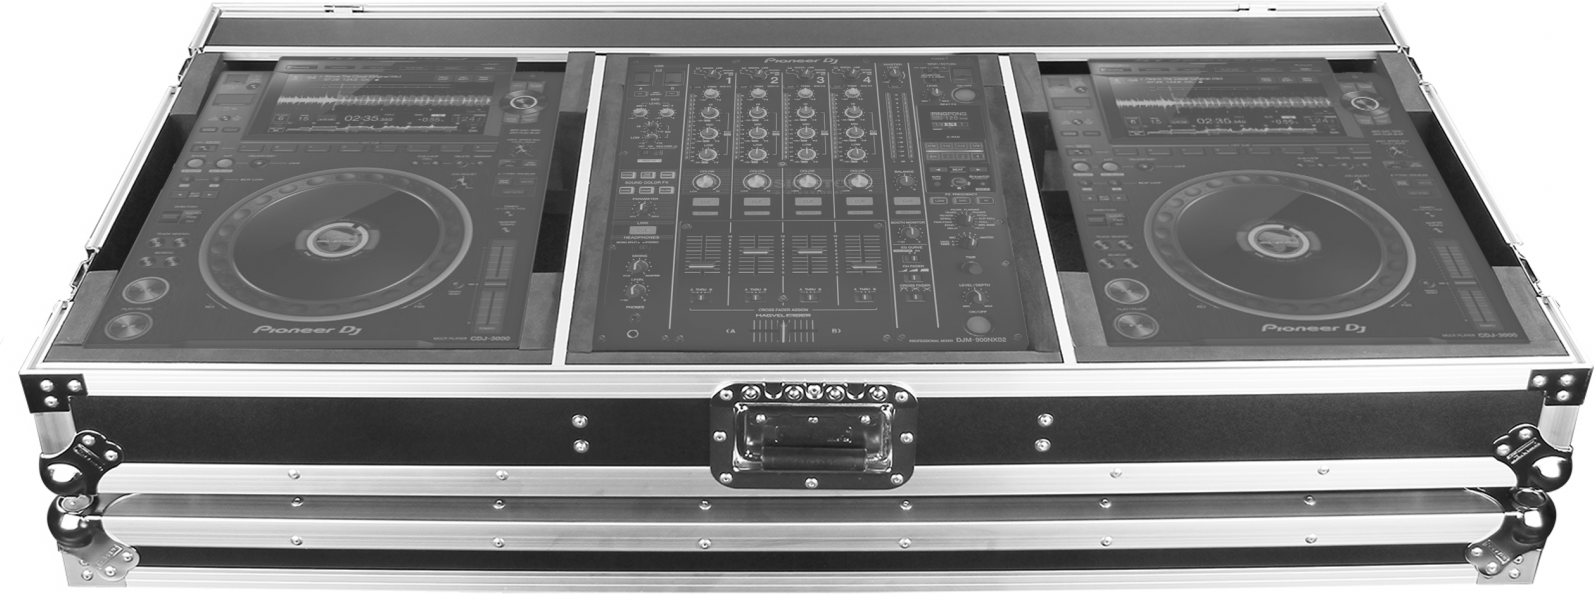 Power Acoustics Pcdm 3000 - Flightcase DJ - Main picture